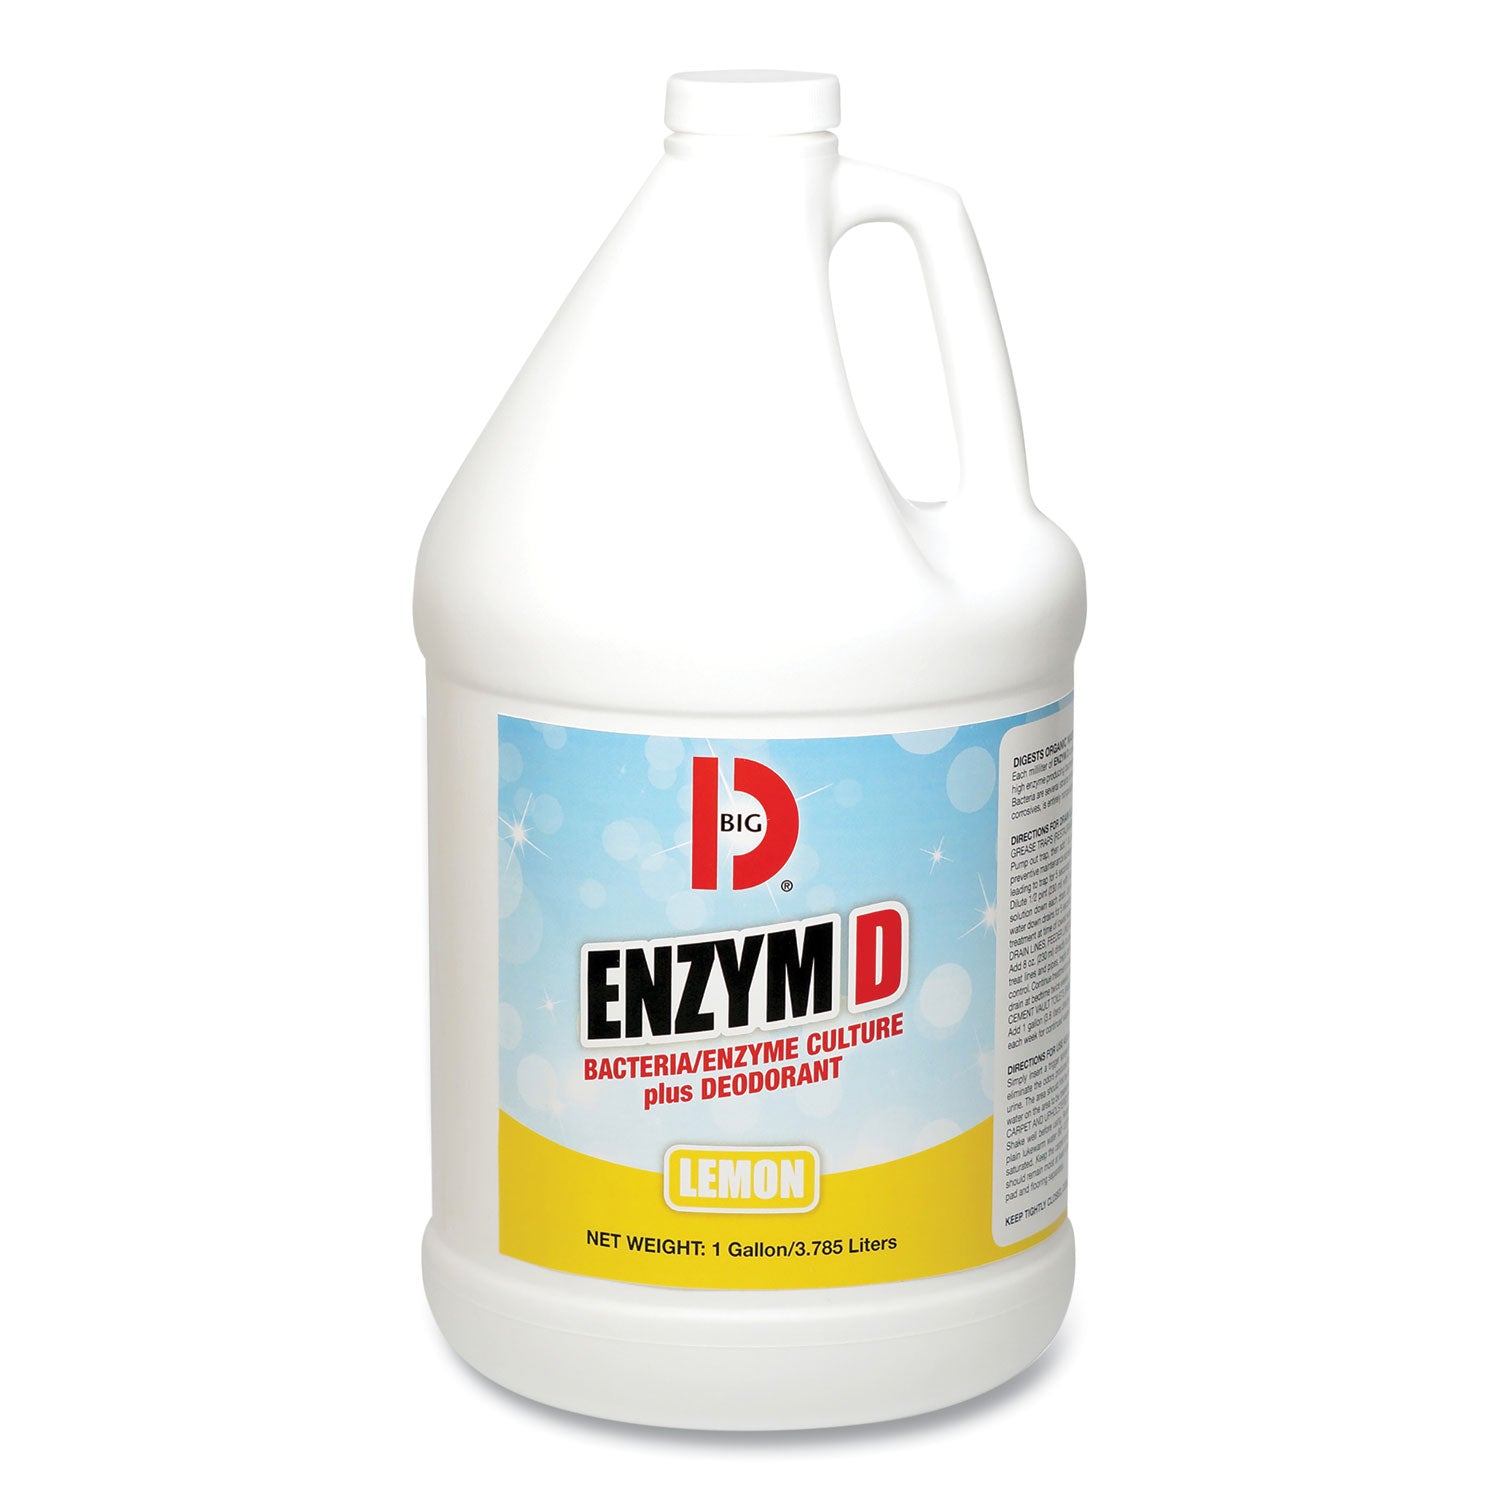 Enzym D Digester Liquid Deodorant, Lemon, 1 gal Bottle, 4/Carton - 